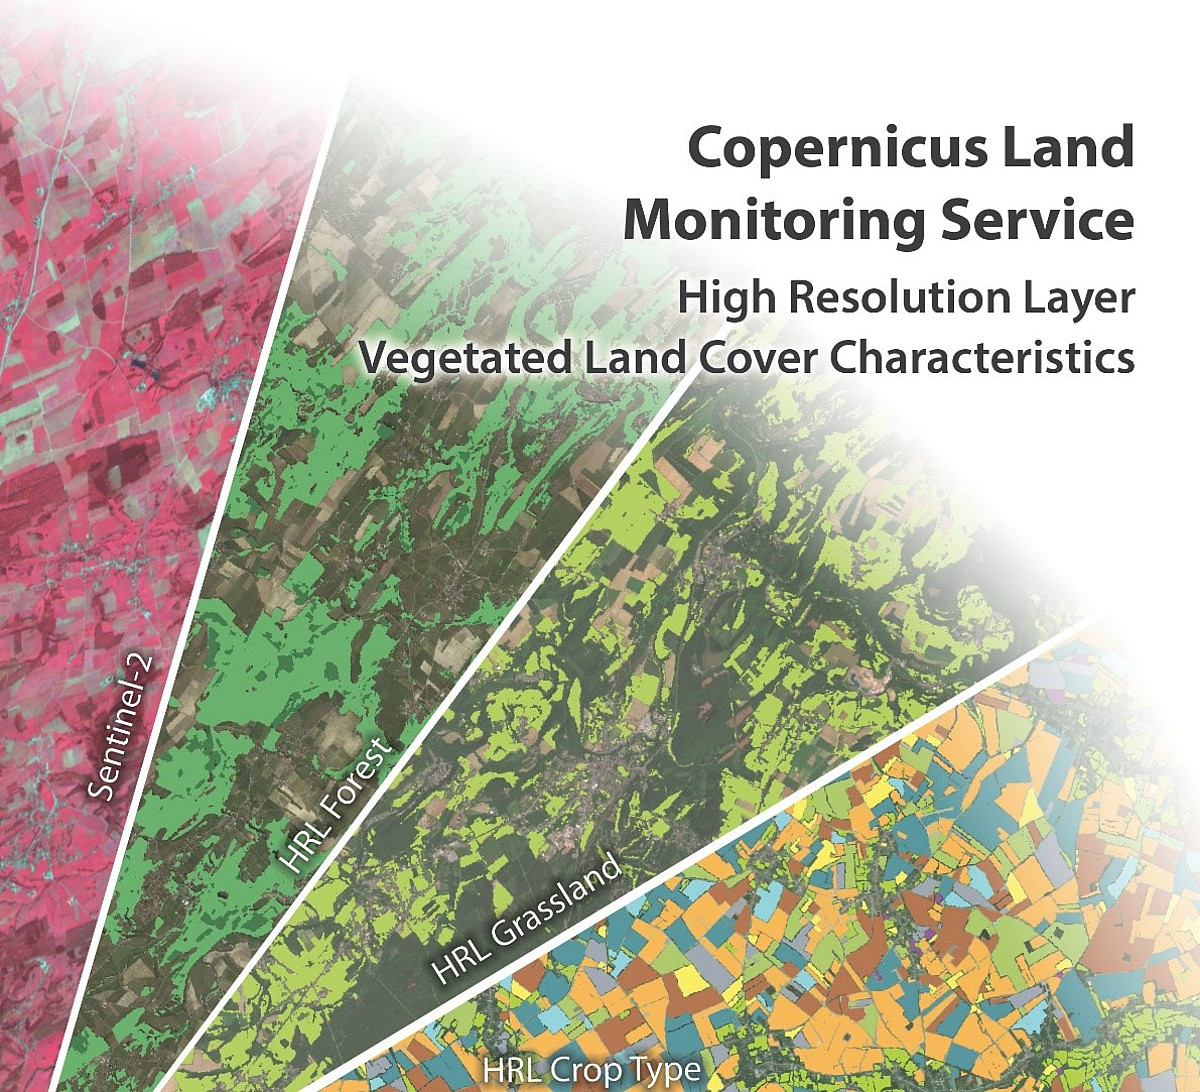 New Copernicus Land Monitoring Service - Enabling High-Resolution Vegetation Monitoring in Europe